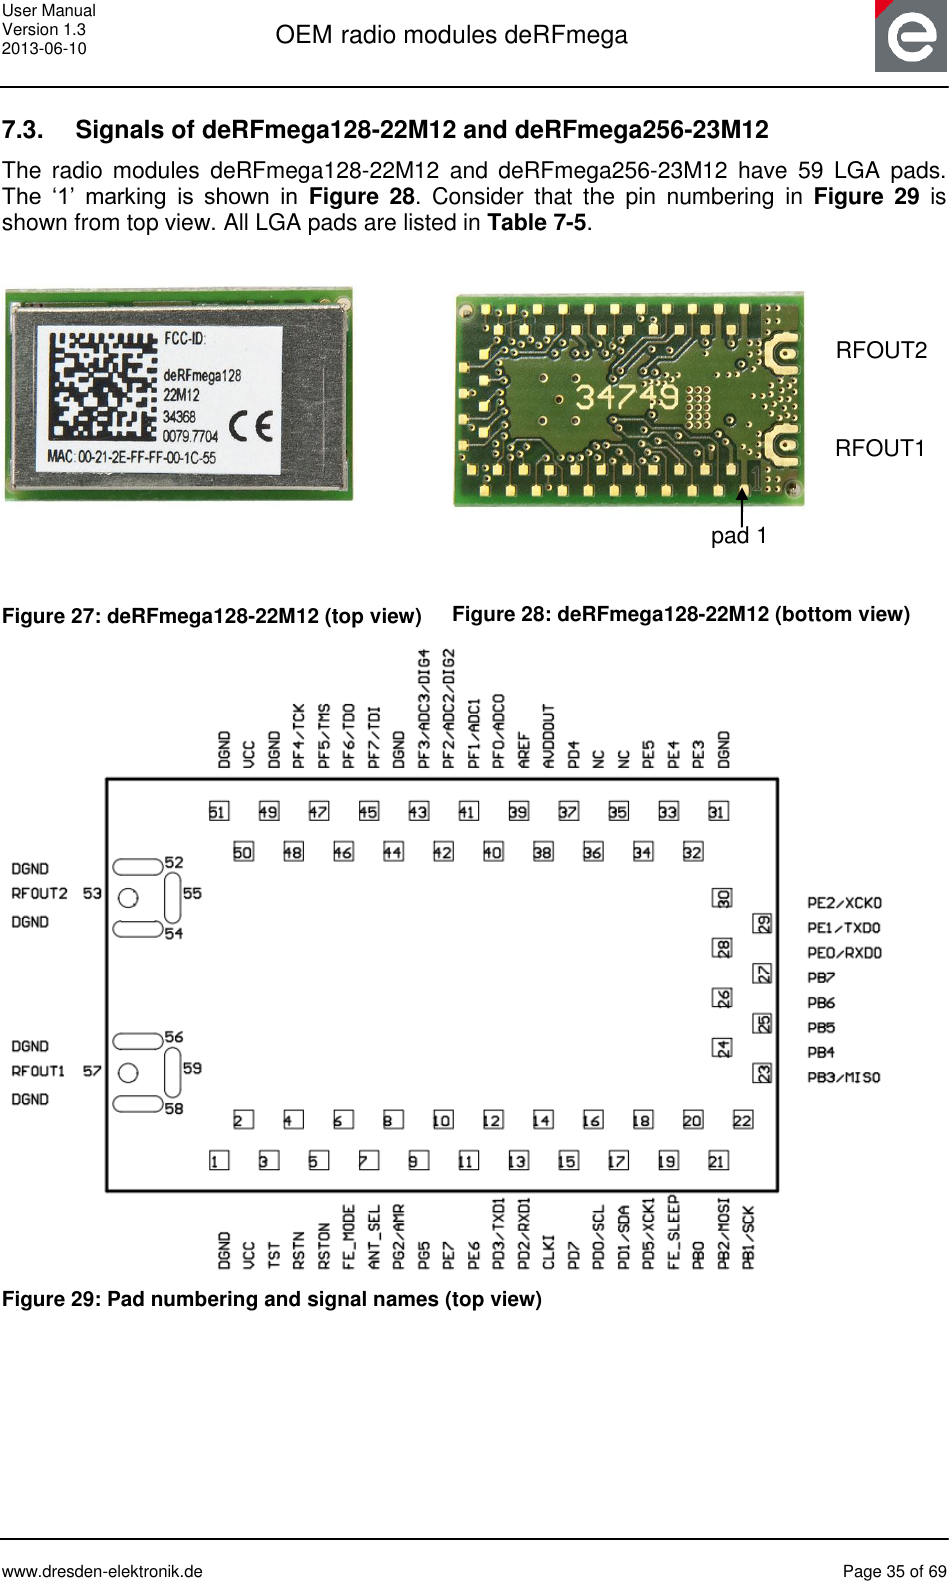 User Manual Version 1.3 2013-06-10  OEM radio modules deRFmega      www.dresden-elektronik.de  Page 35 of 69  7.3.  Signals of deRFmega128-22M12 and deRFmega256-23M12 The  radio  modules  deRFmega128-22M12  and  deRFmega256-23M12  have 59  LGA  pads. The  ‘1’  marking  is  shown  in  Figure  28.  Consider  that  the  pin  numbering  in  Figure  29  is shown from top view. All LGA pads are listed in Table 7-5.    Figure 27: deRFmega128-22M12 (top view)   Figure 28: deRFmega128-22M12 (bottom view)  Figure 29: Pad numbering and signal names (top view)     pad 1  RFOUT10 RFOUT2 